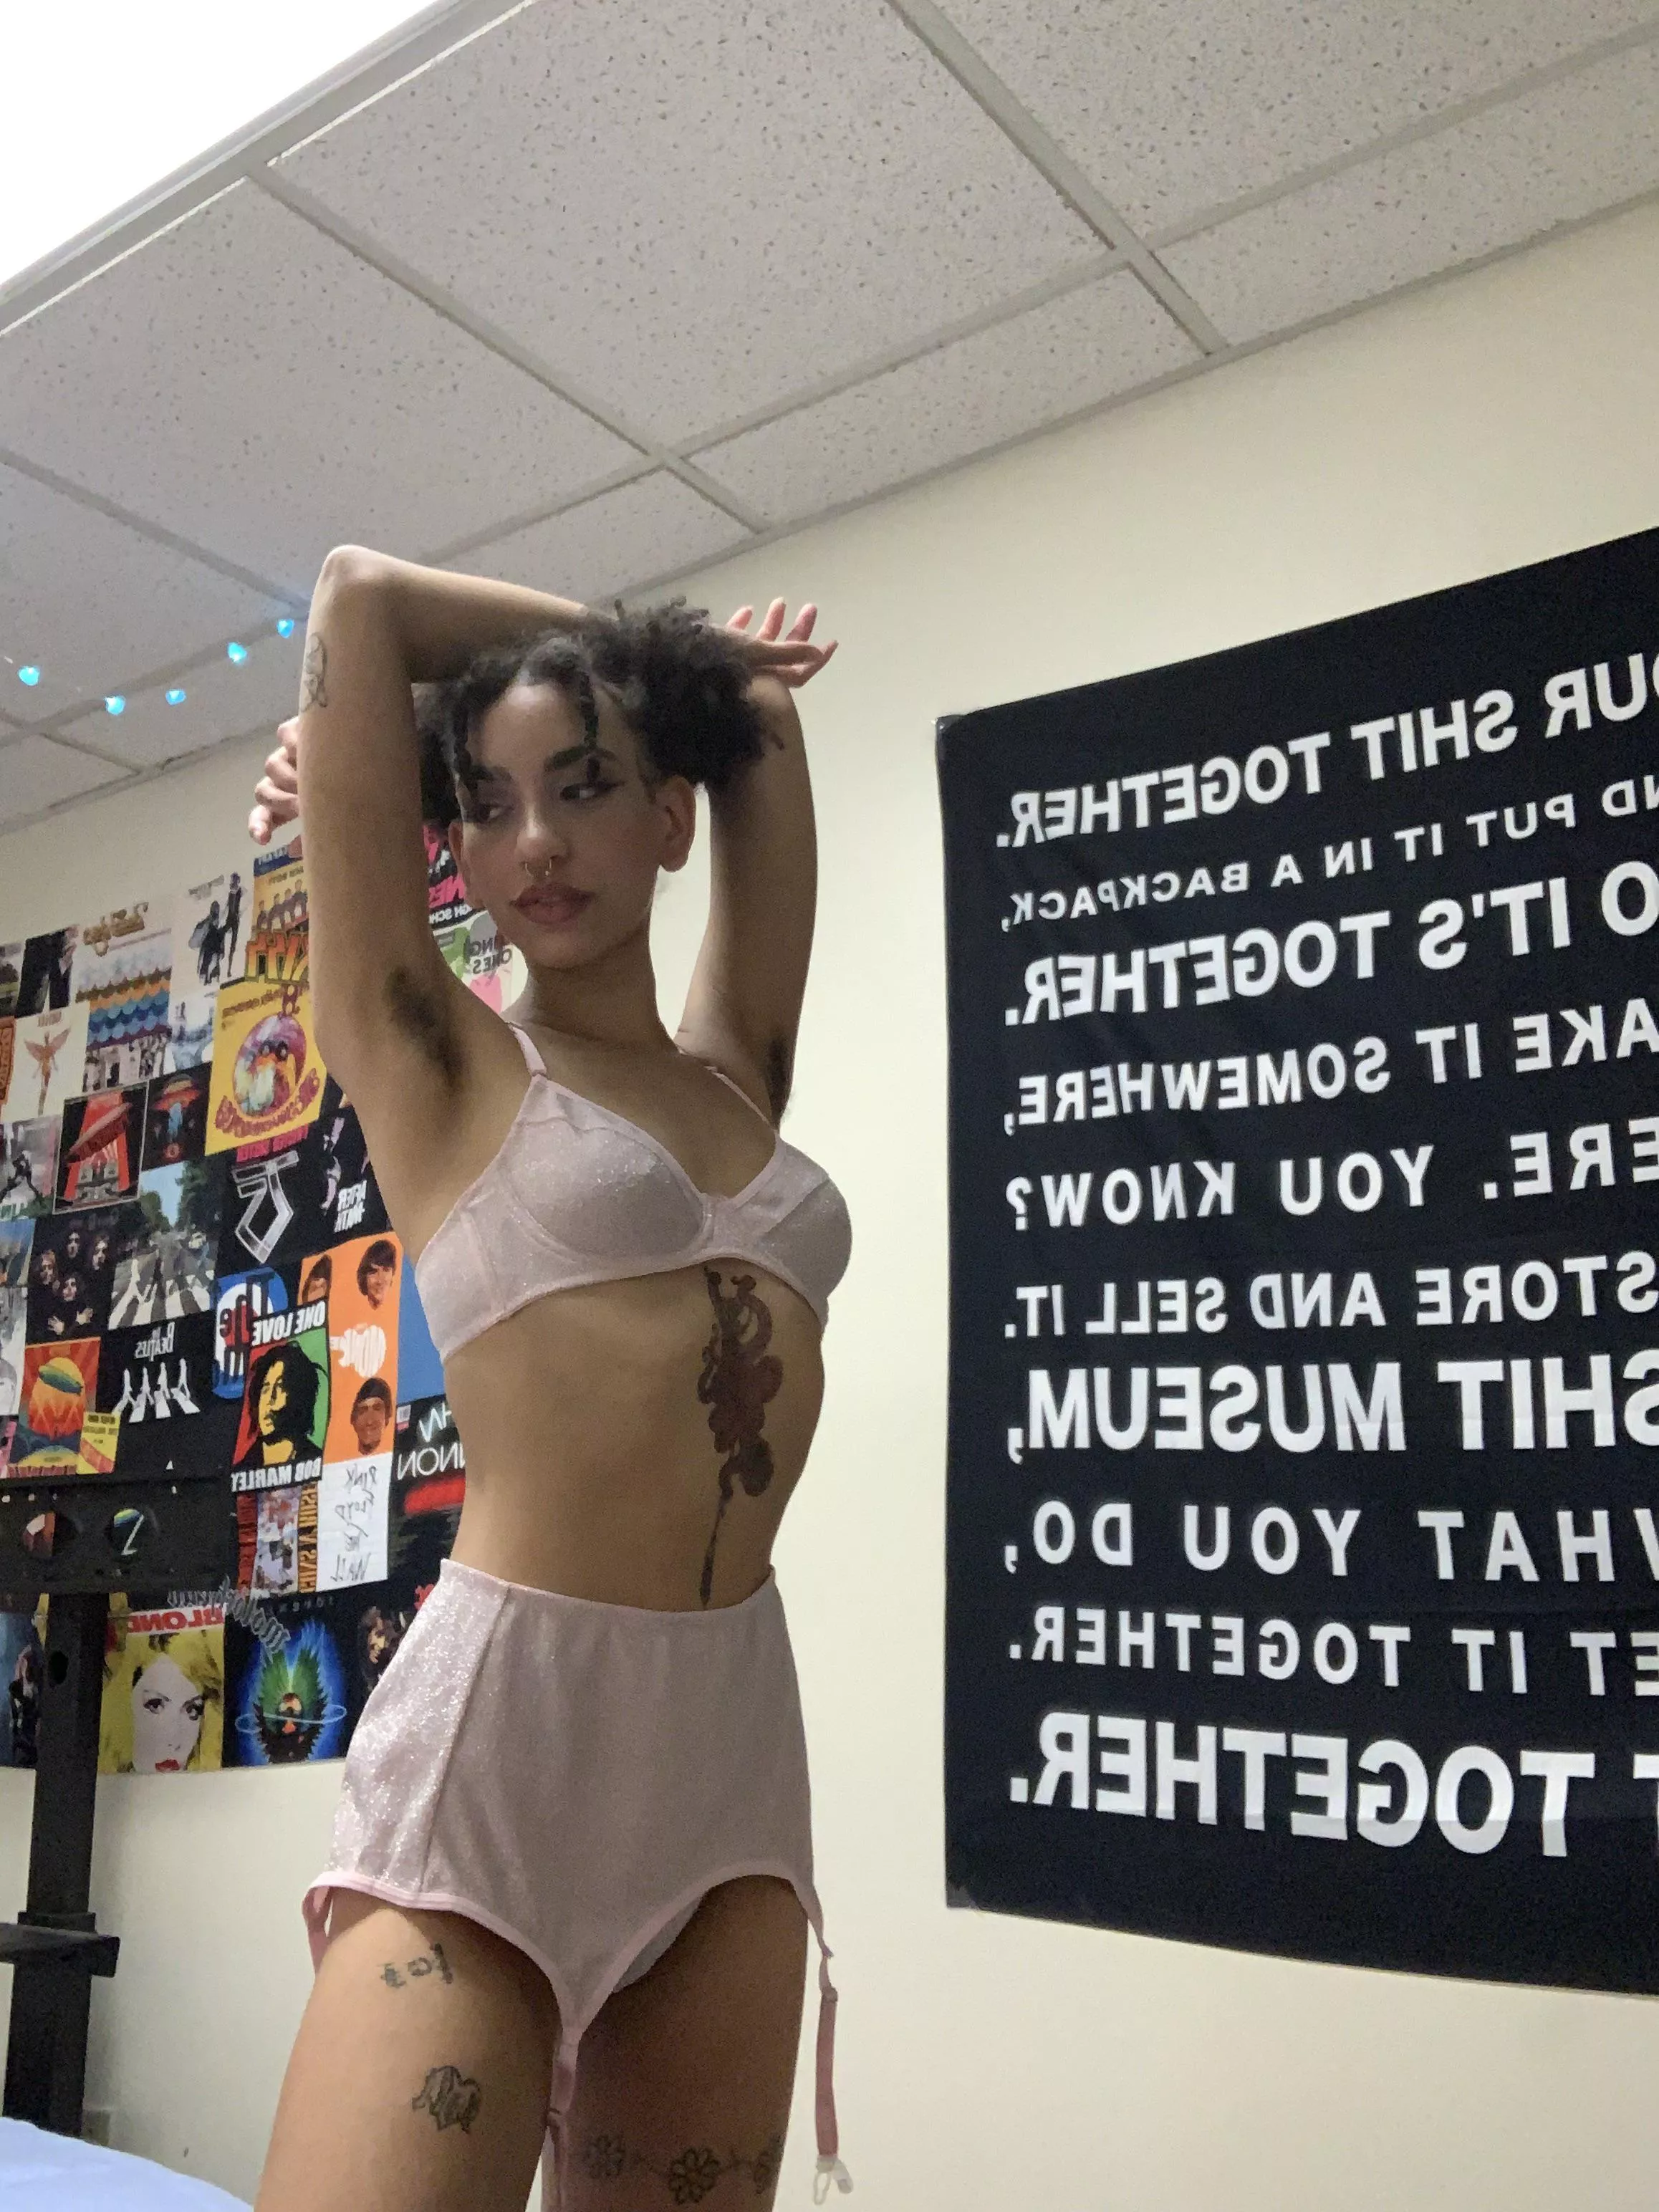 Skinny College Slut - skinny college slut looking for rock hard dick in your area nudes : Ebony |  NUDE-PICS.ORG